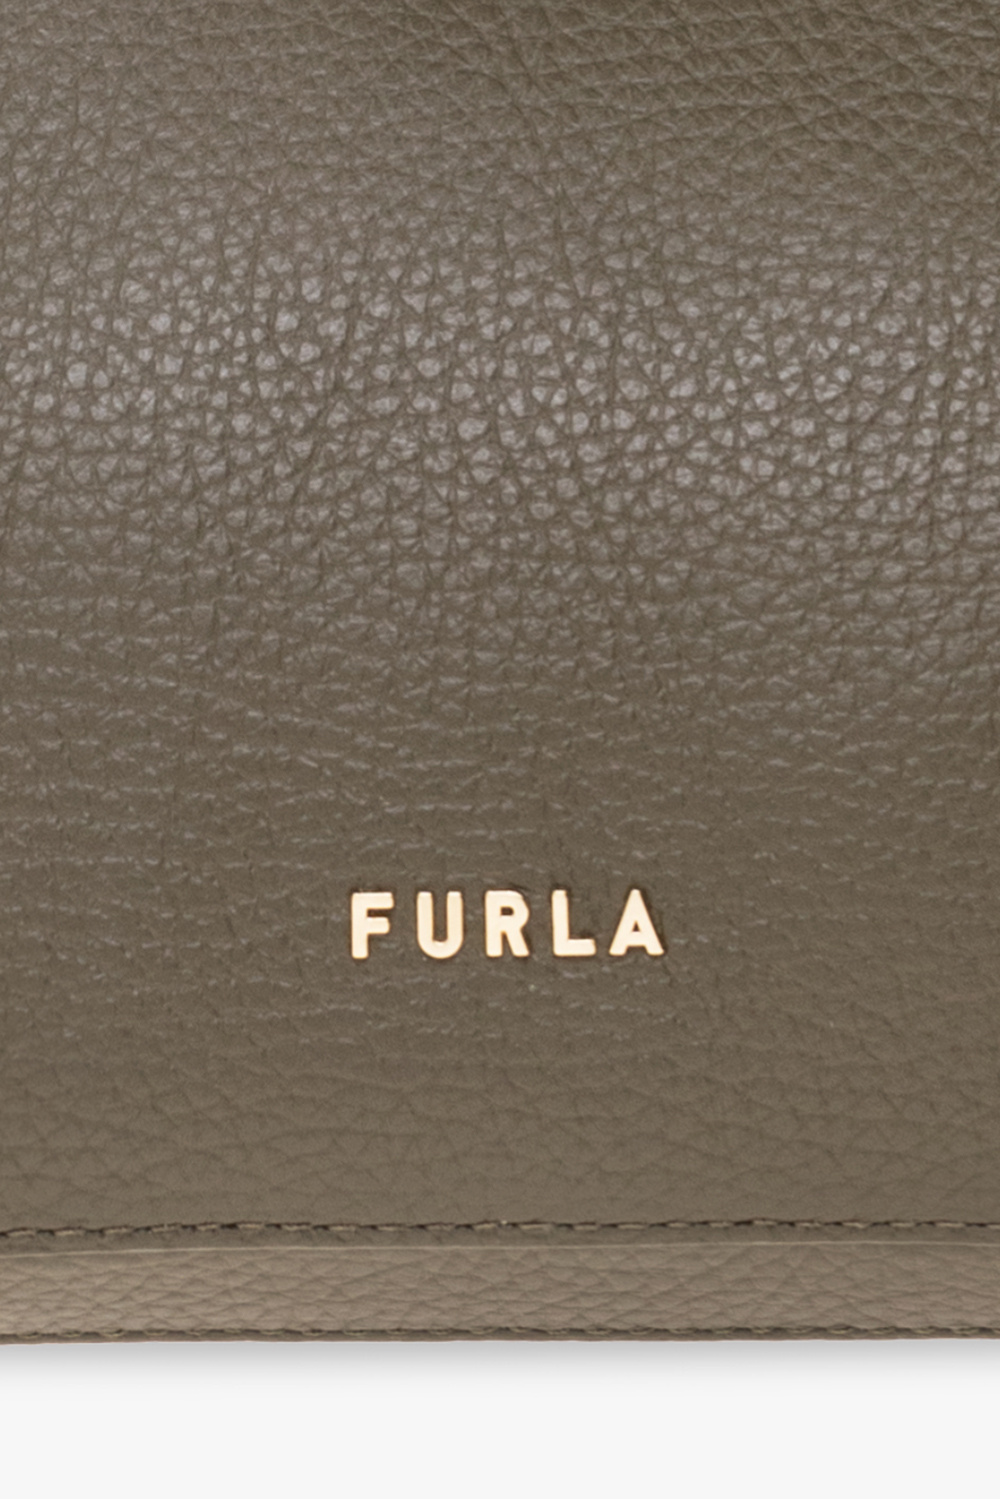 Furla ‘Skye Small’ hobo shoulder logo bag